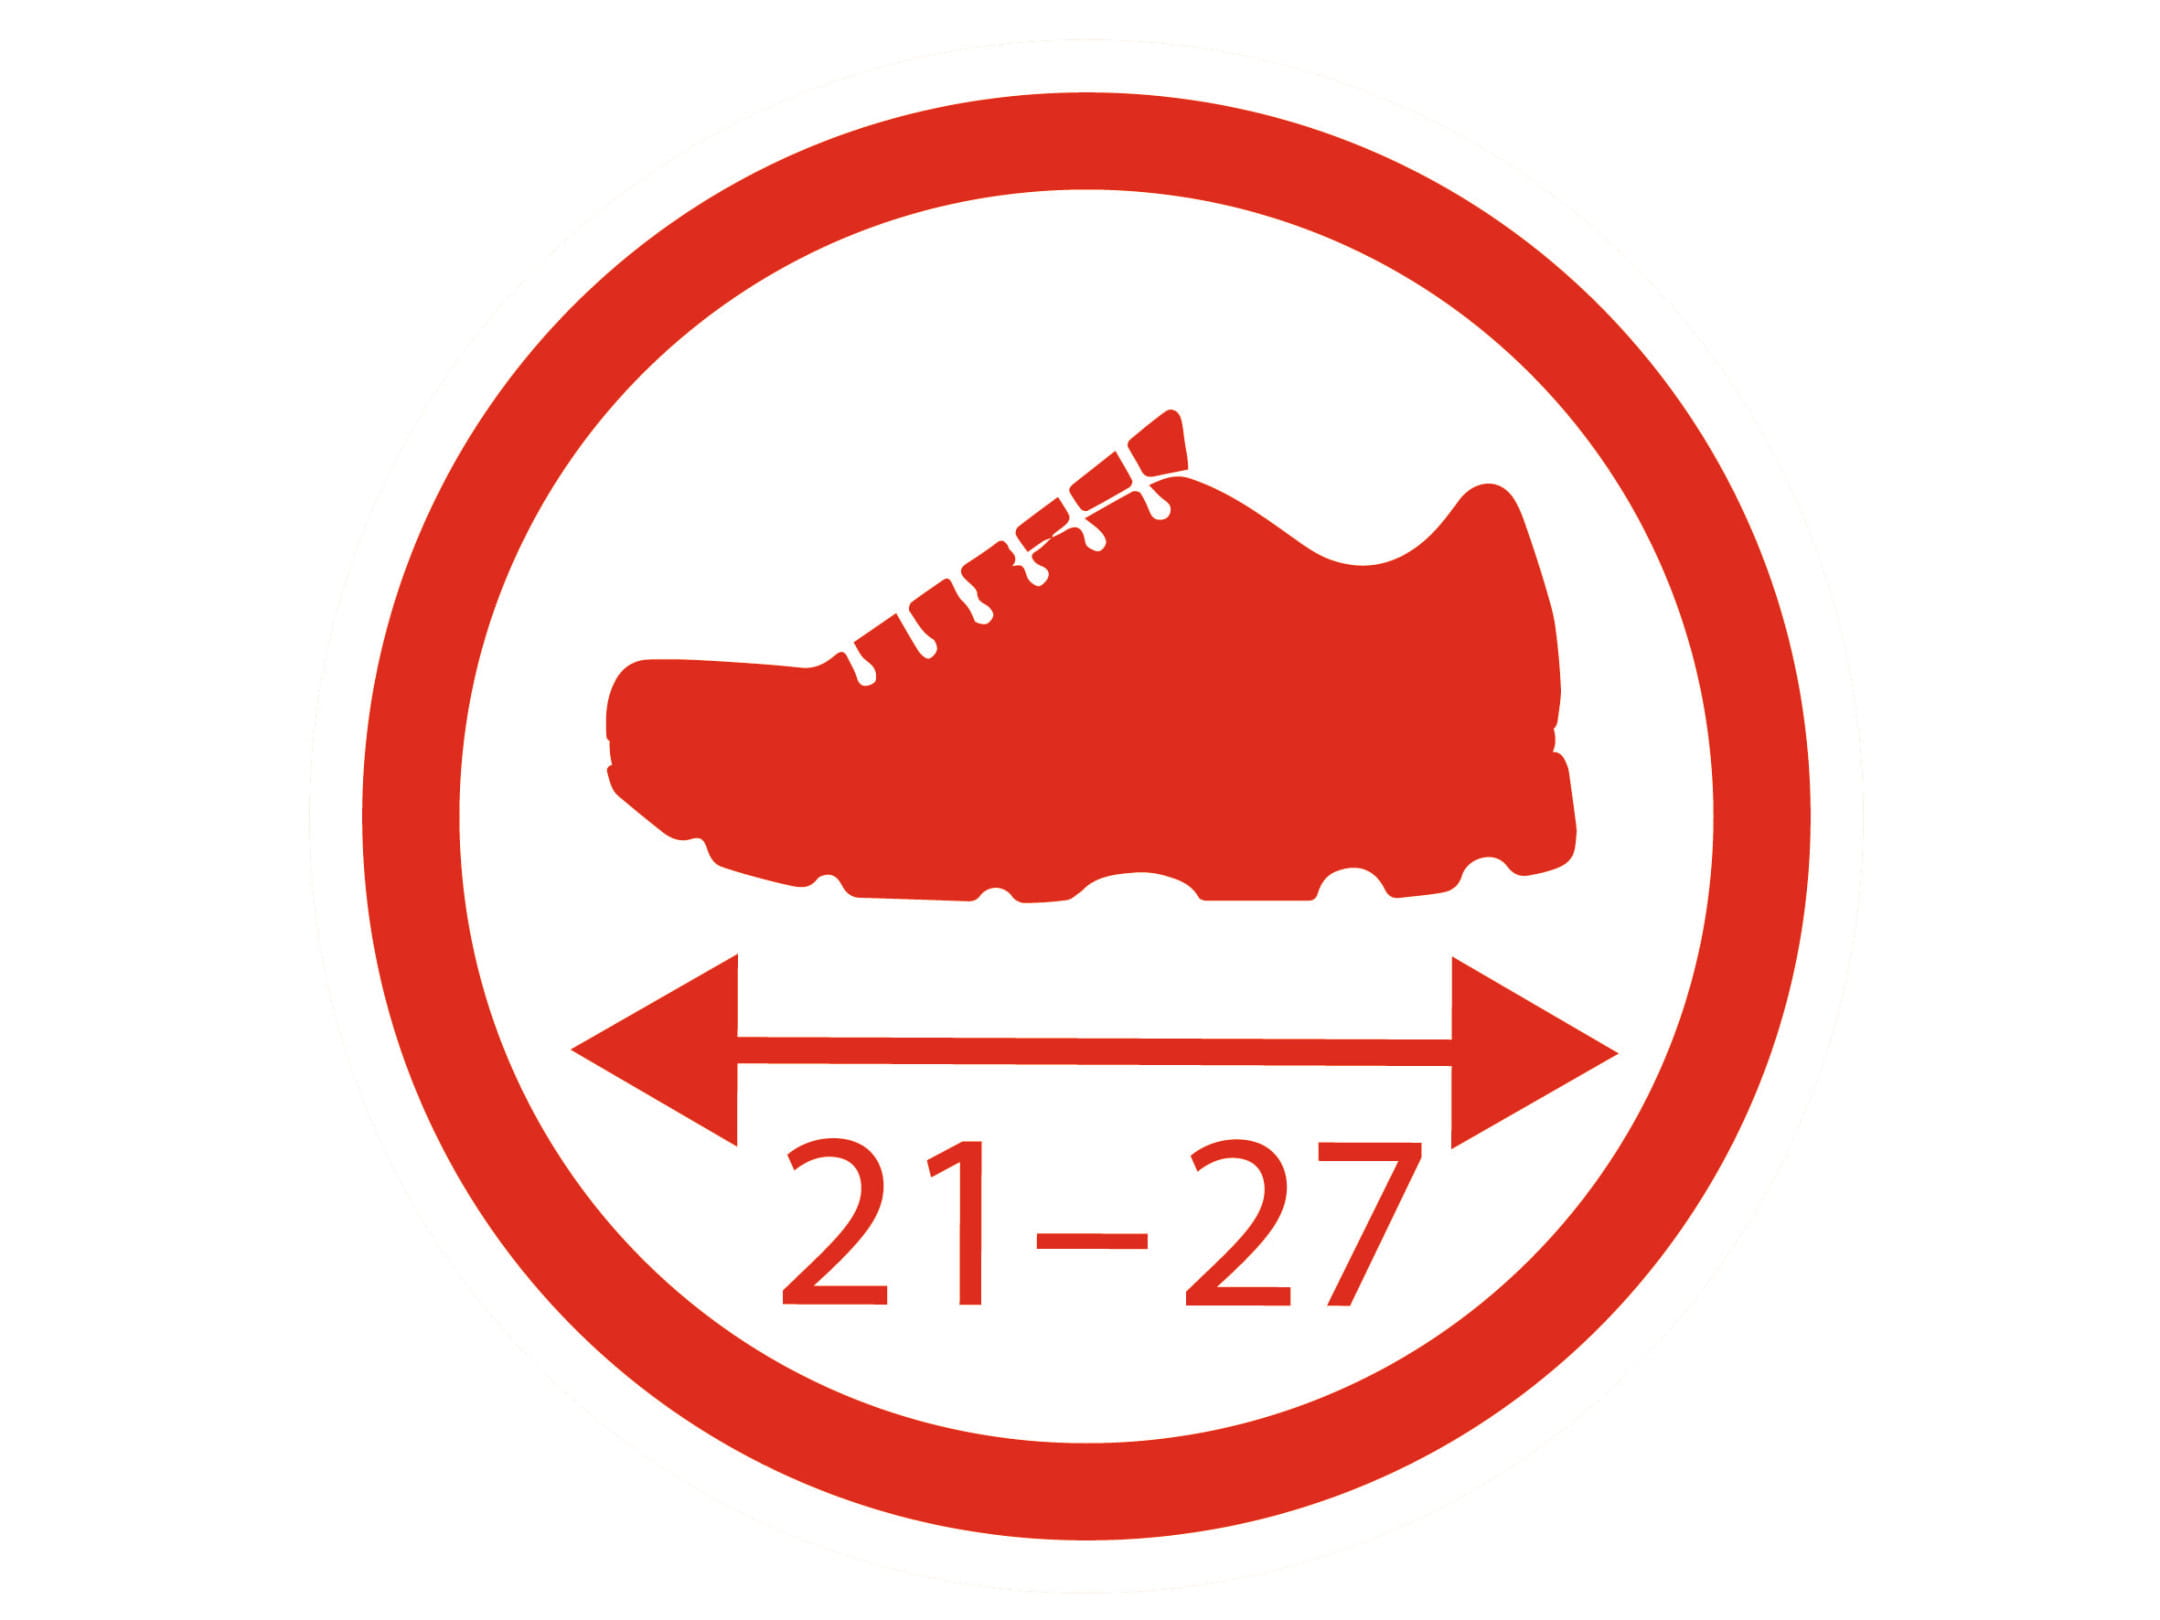 BIG Shoe Care Schuh Schoner Rot 21-27